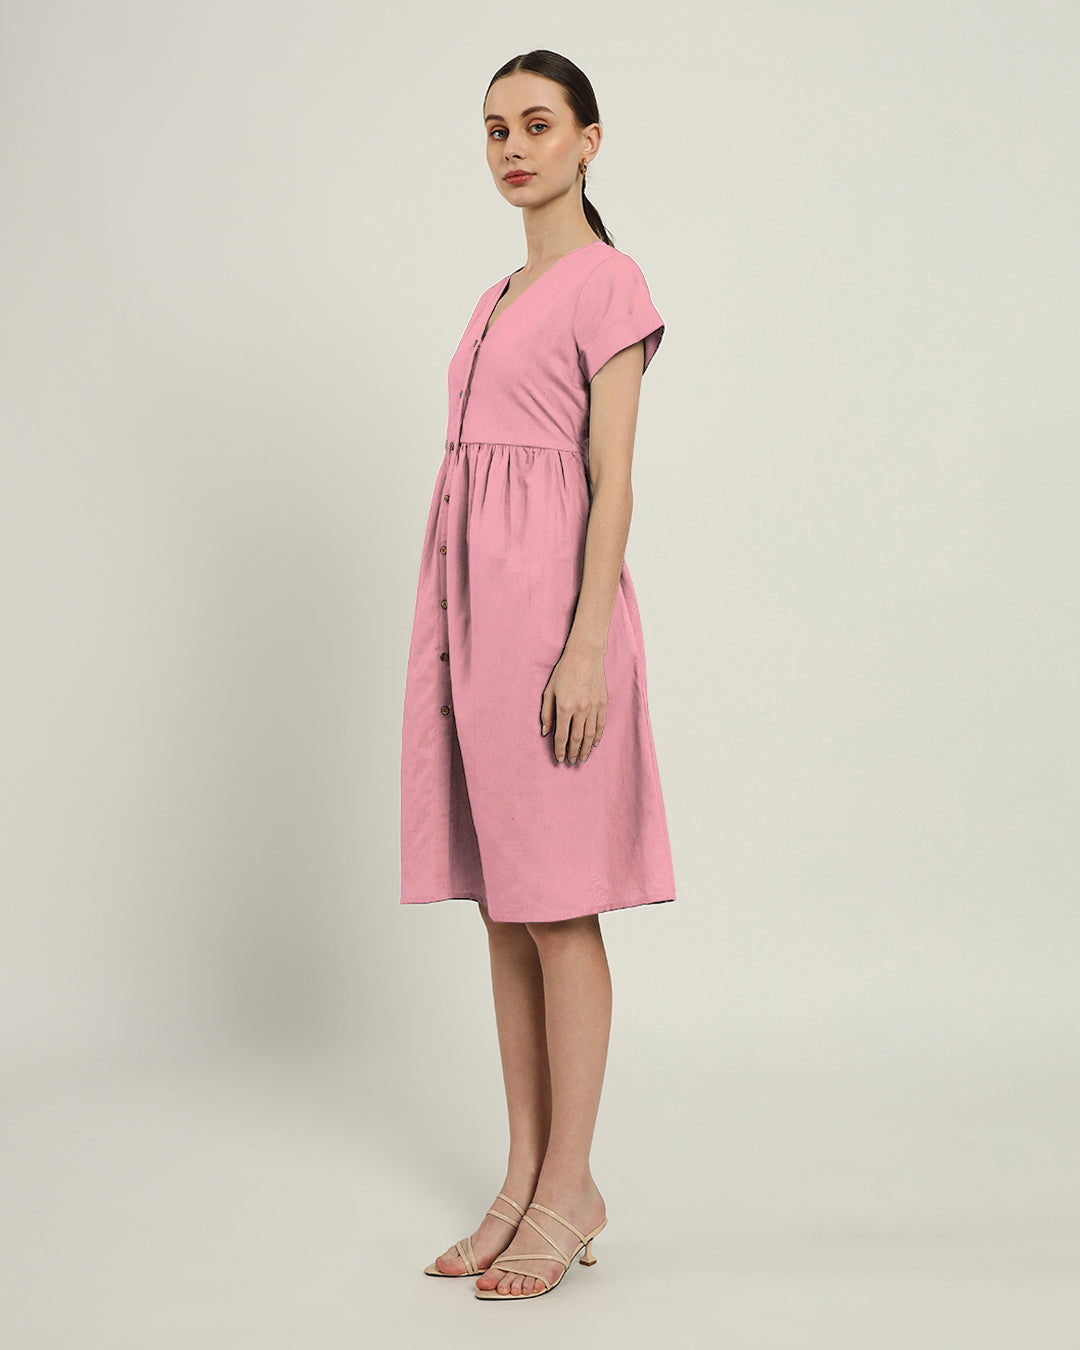 The Valence Fondant Pink Cotton Dress